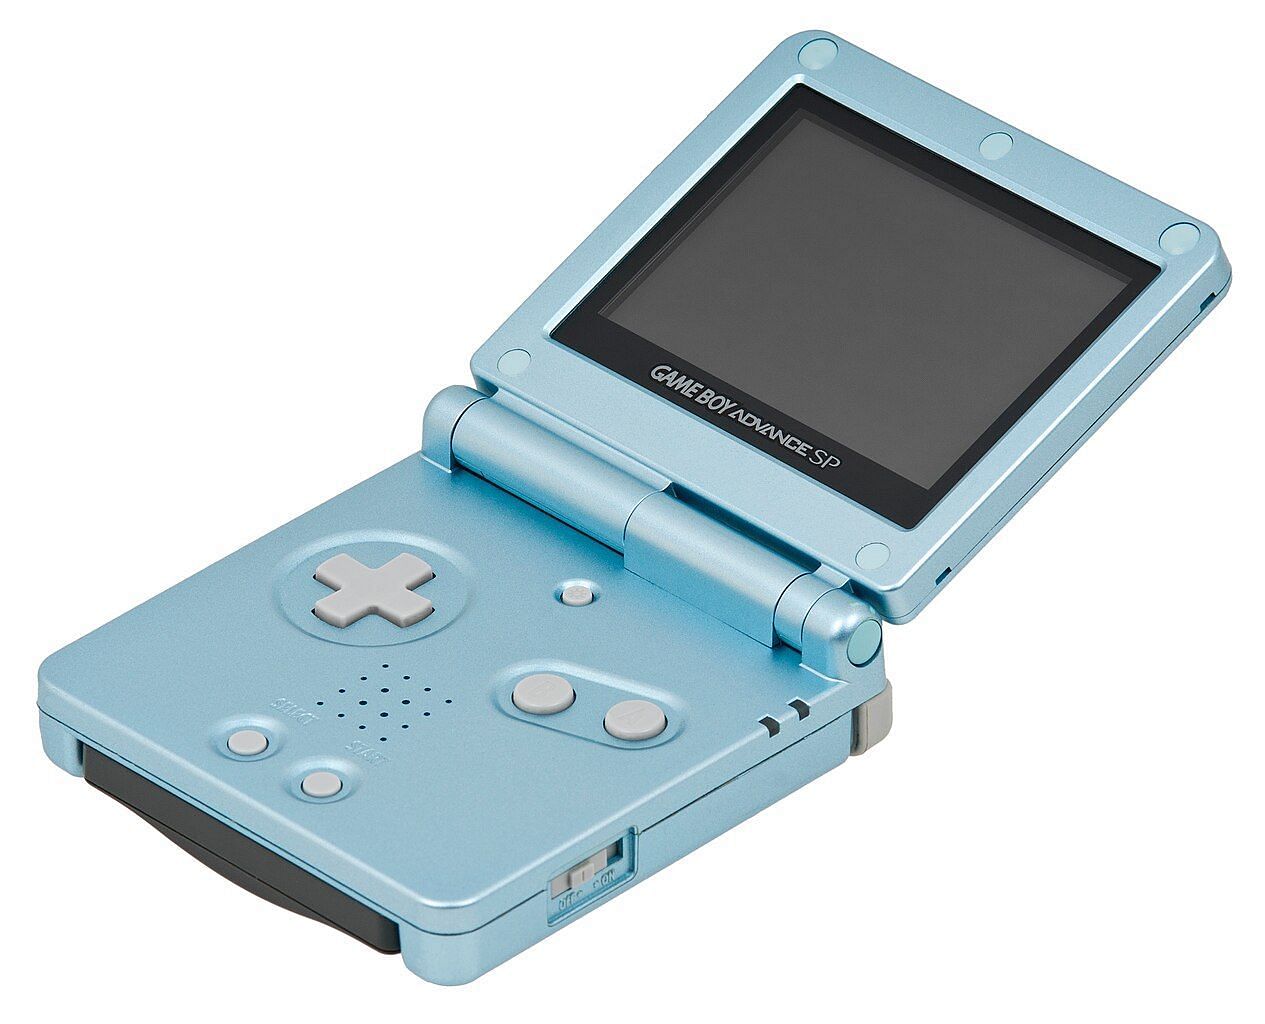 The Game Boy Advance SP (Image via Wikipedia/Creative Commons)